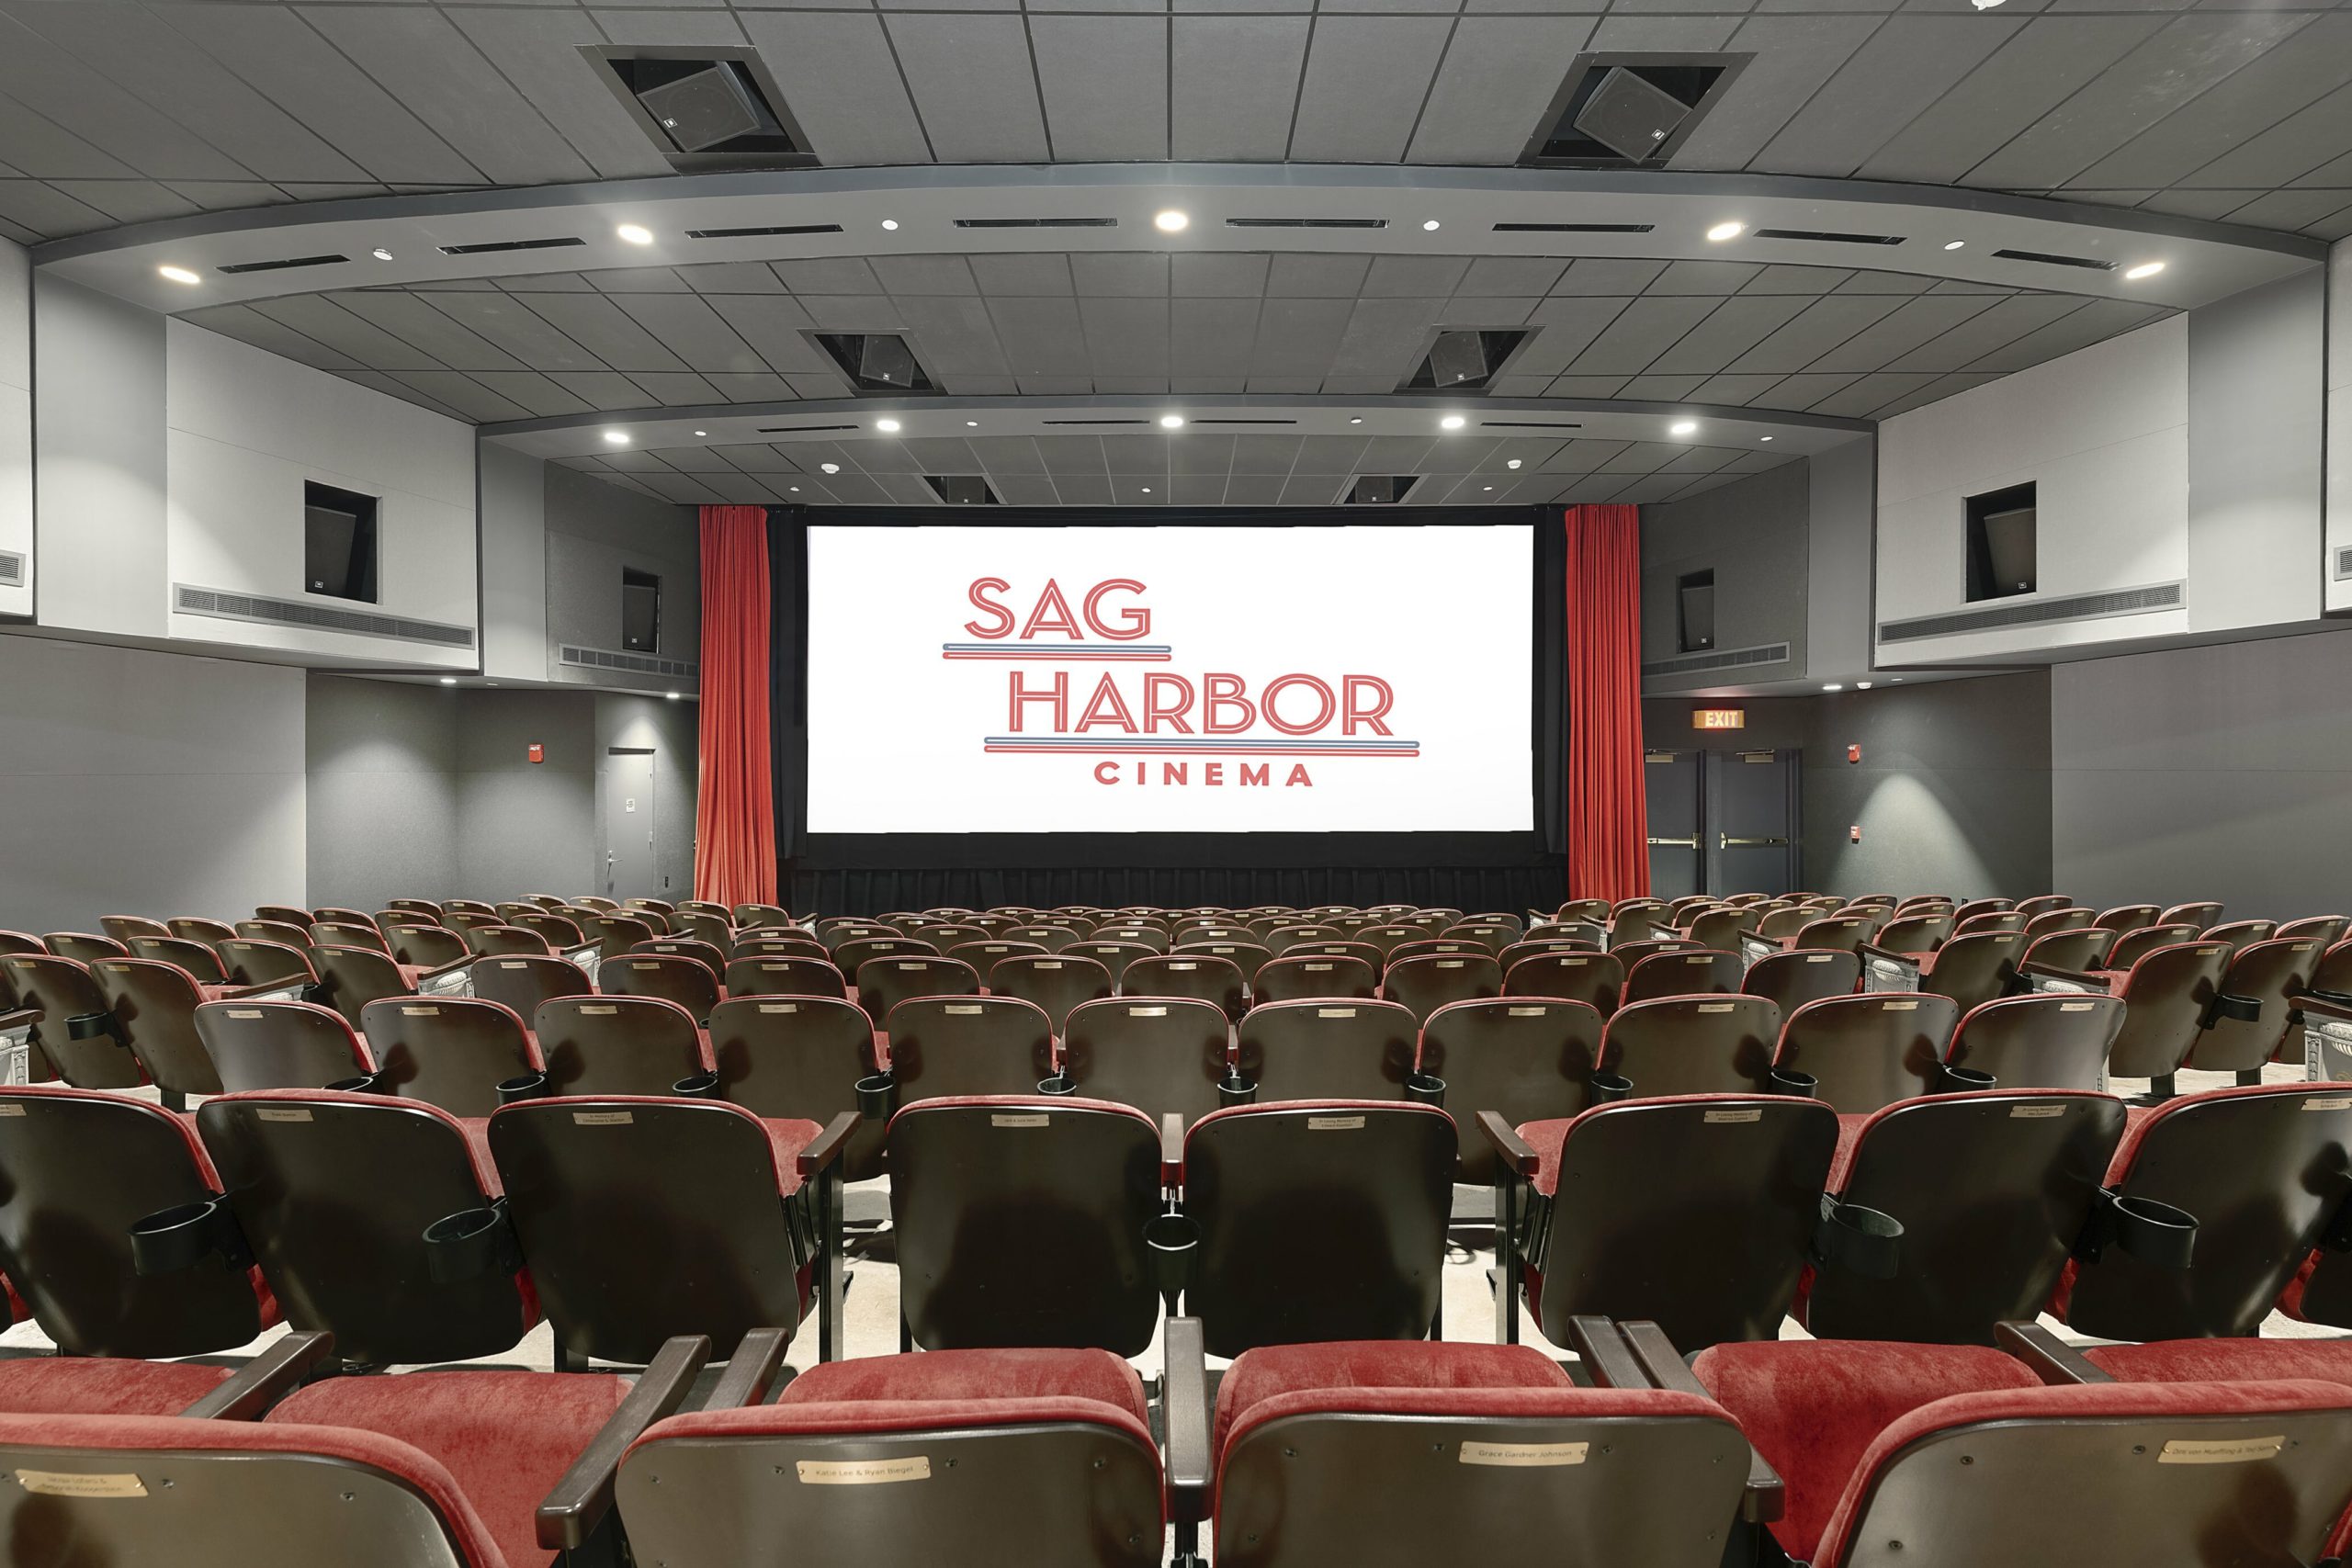 A sneak-peek inside the main theater at the new Sag Harbor Cinema.